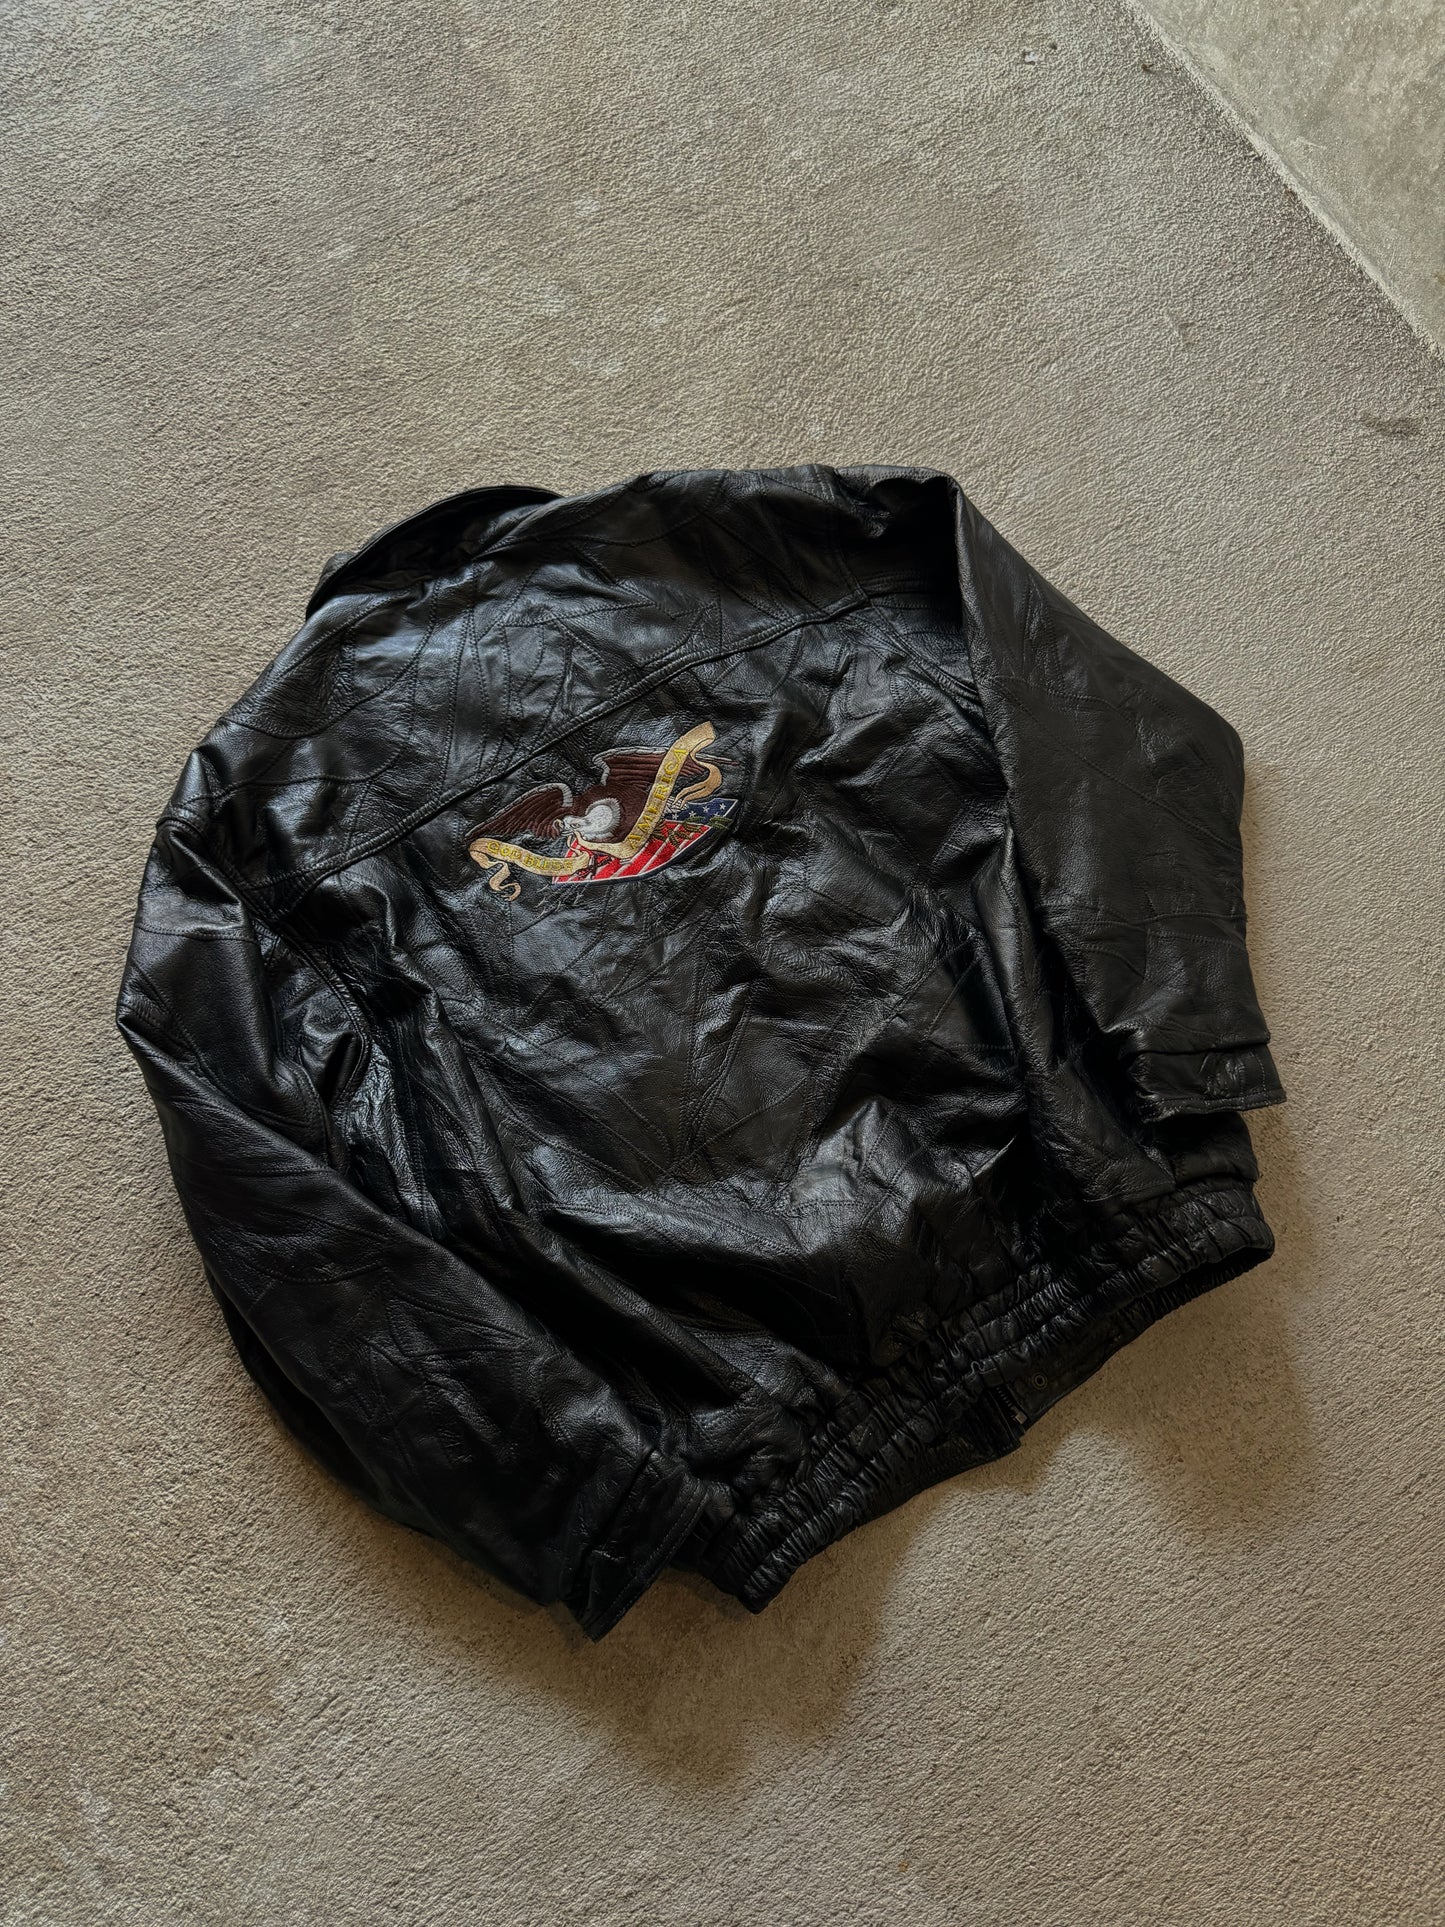 (L) 90’s Vintage USA Leather Jacket